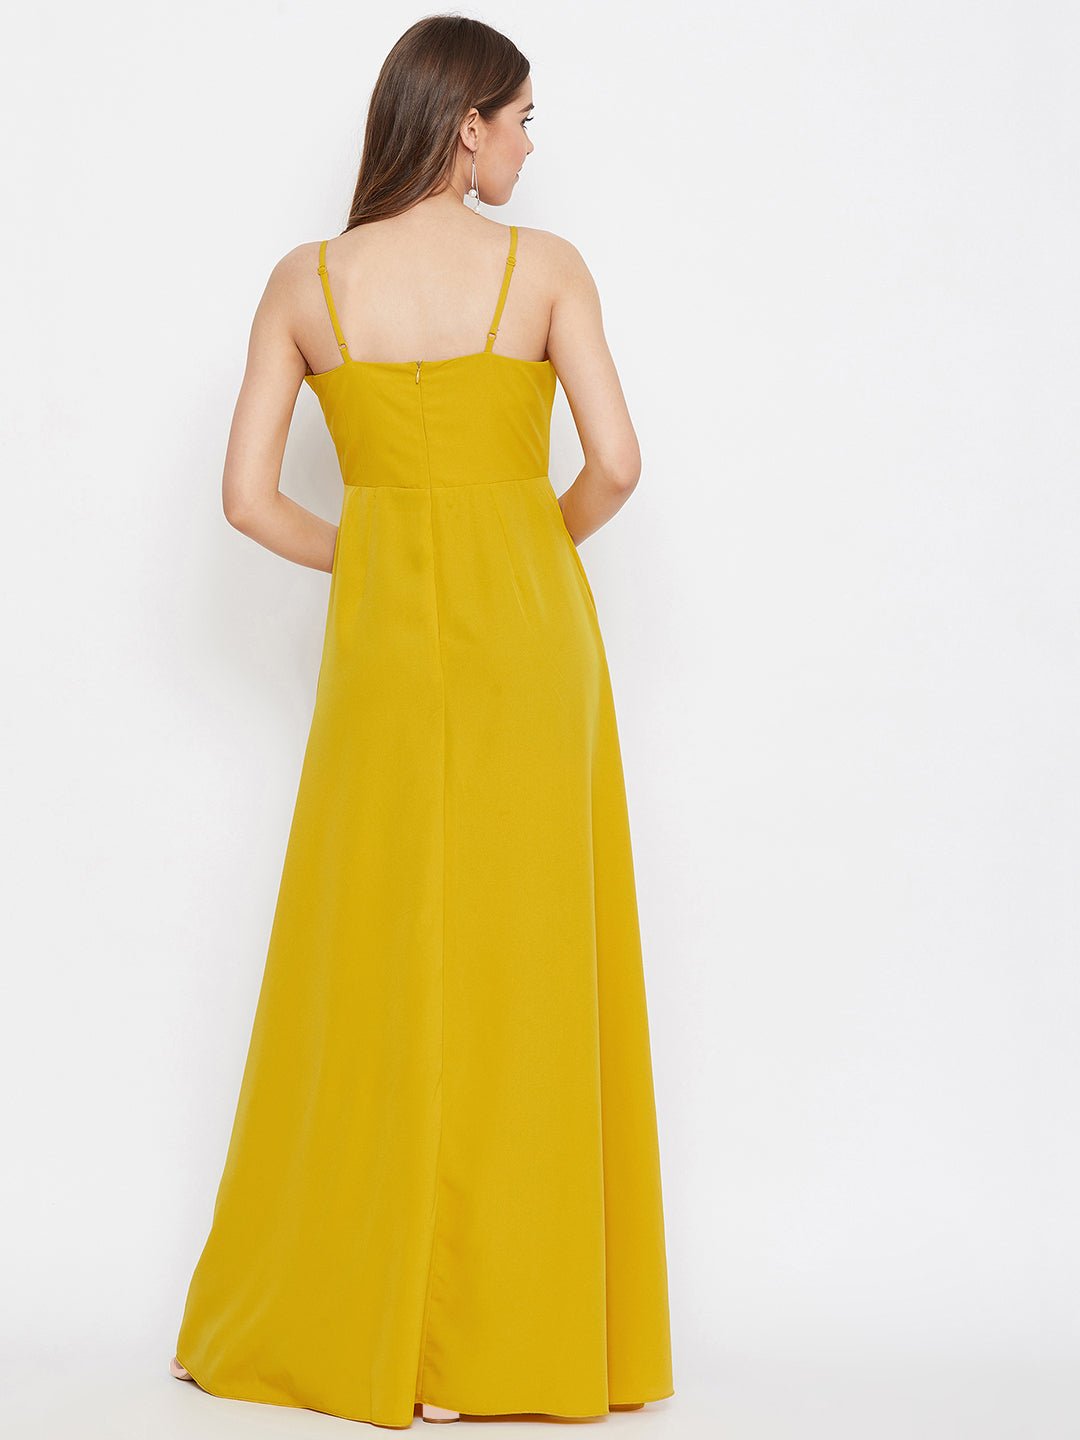 Folk Republic Women Solid Yellow Front Frill V-Neck Thigh-High Slit Maxi Dress - #folk republic#